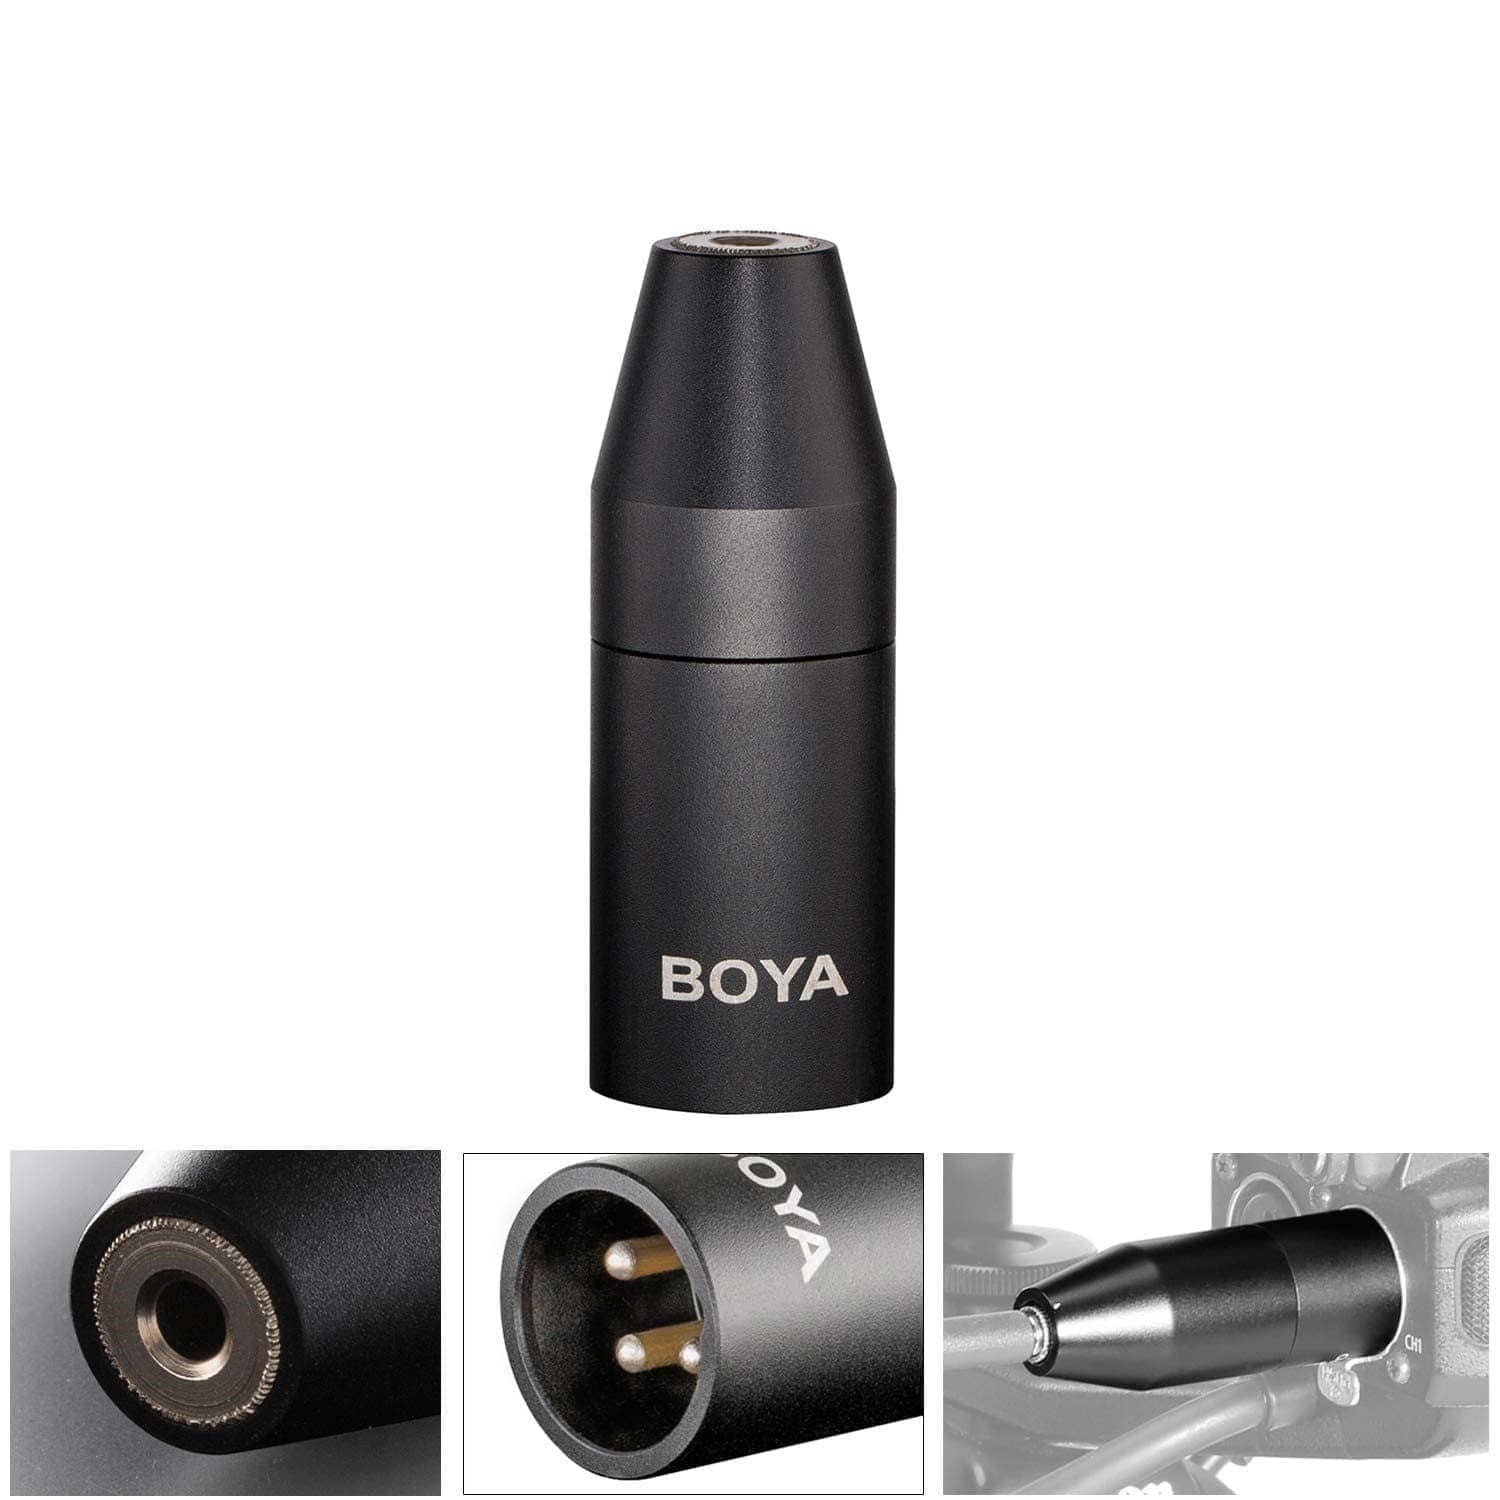 Boya 35C-XLR 3.5mm Mini-Jack to XLR Converter - Toottoot Singapore